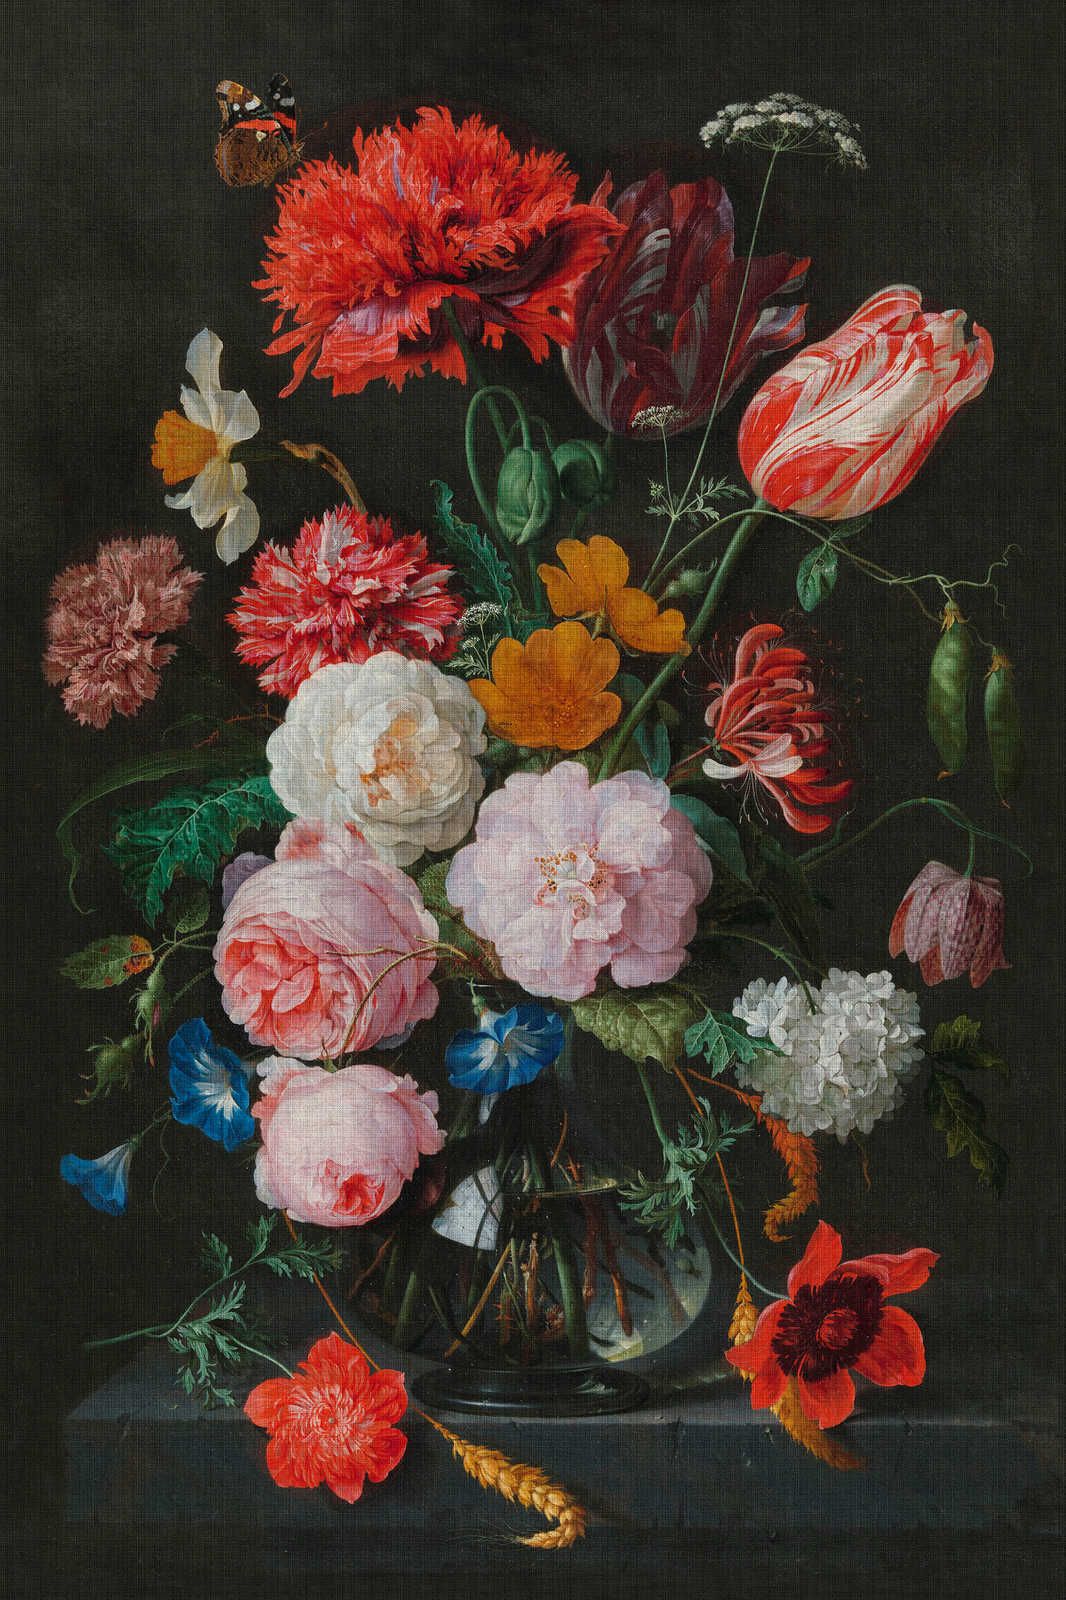             Artists Studio 4 - Quadro su tela Flowers Still Life with Roses - 0,60 m x 0,90 m
        